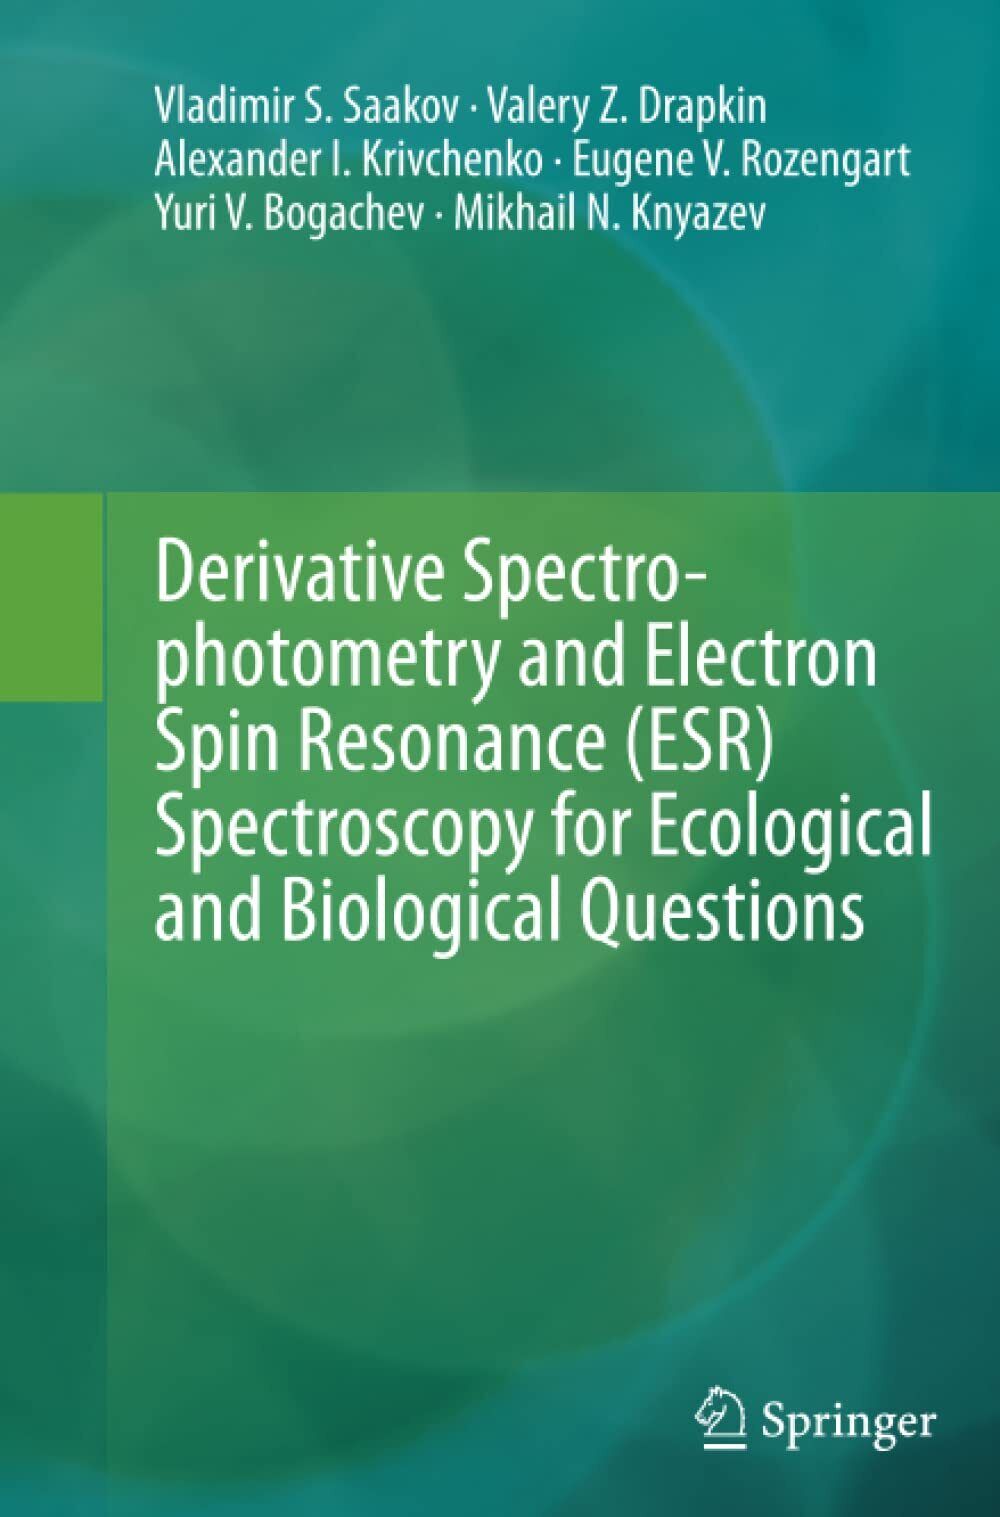 Derivative Spectrophotometry and Electron Spin Resonance (ESR) Spectroscopy 